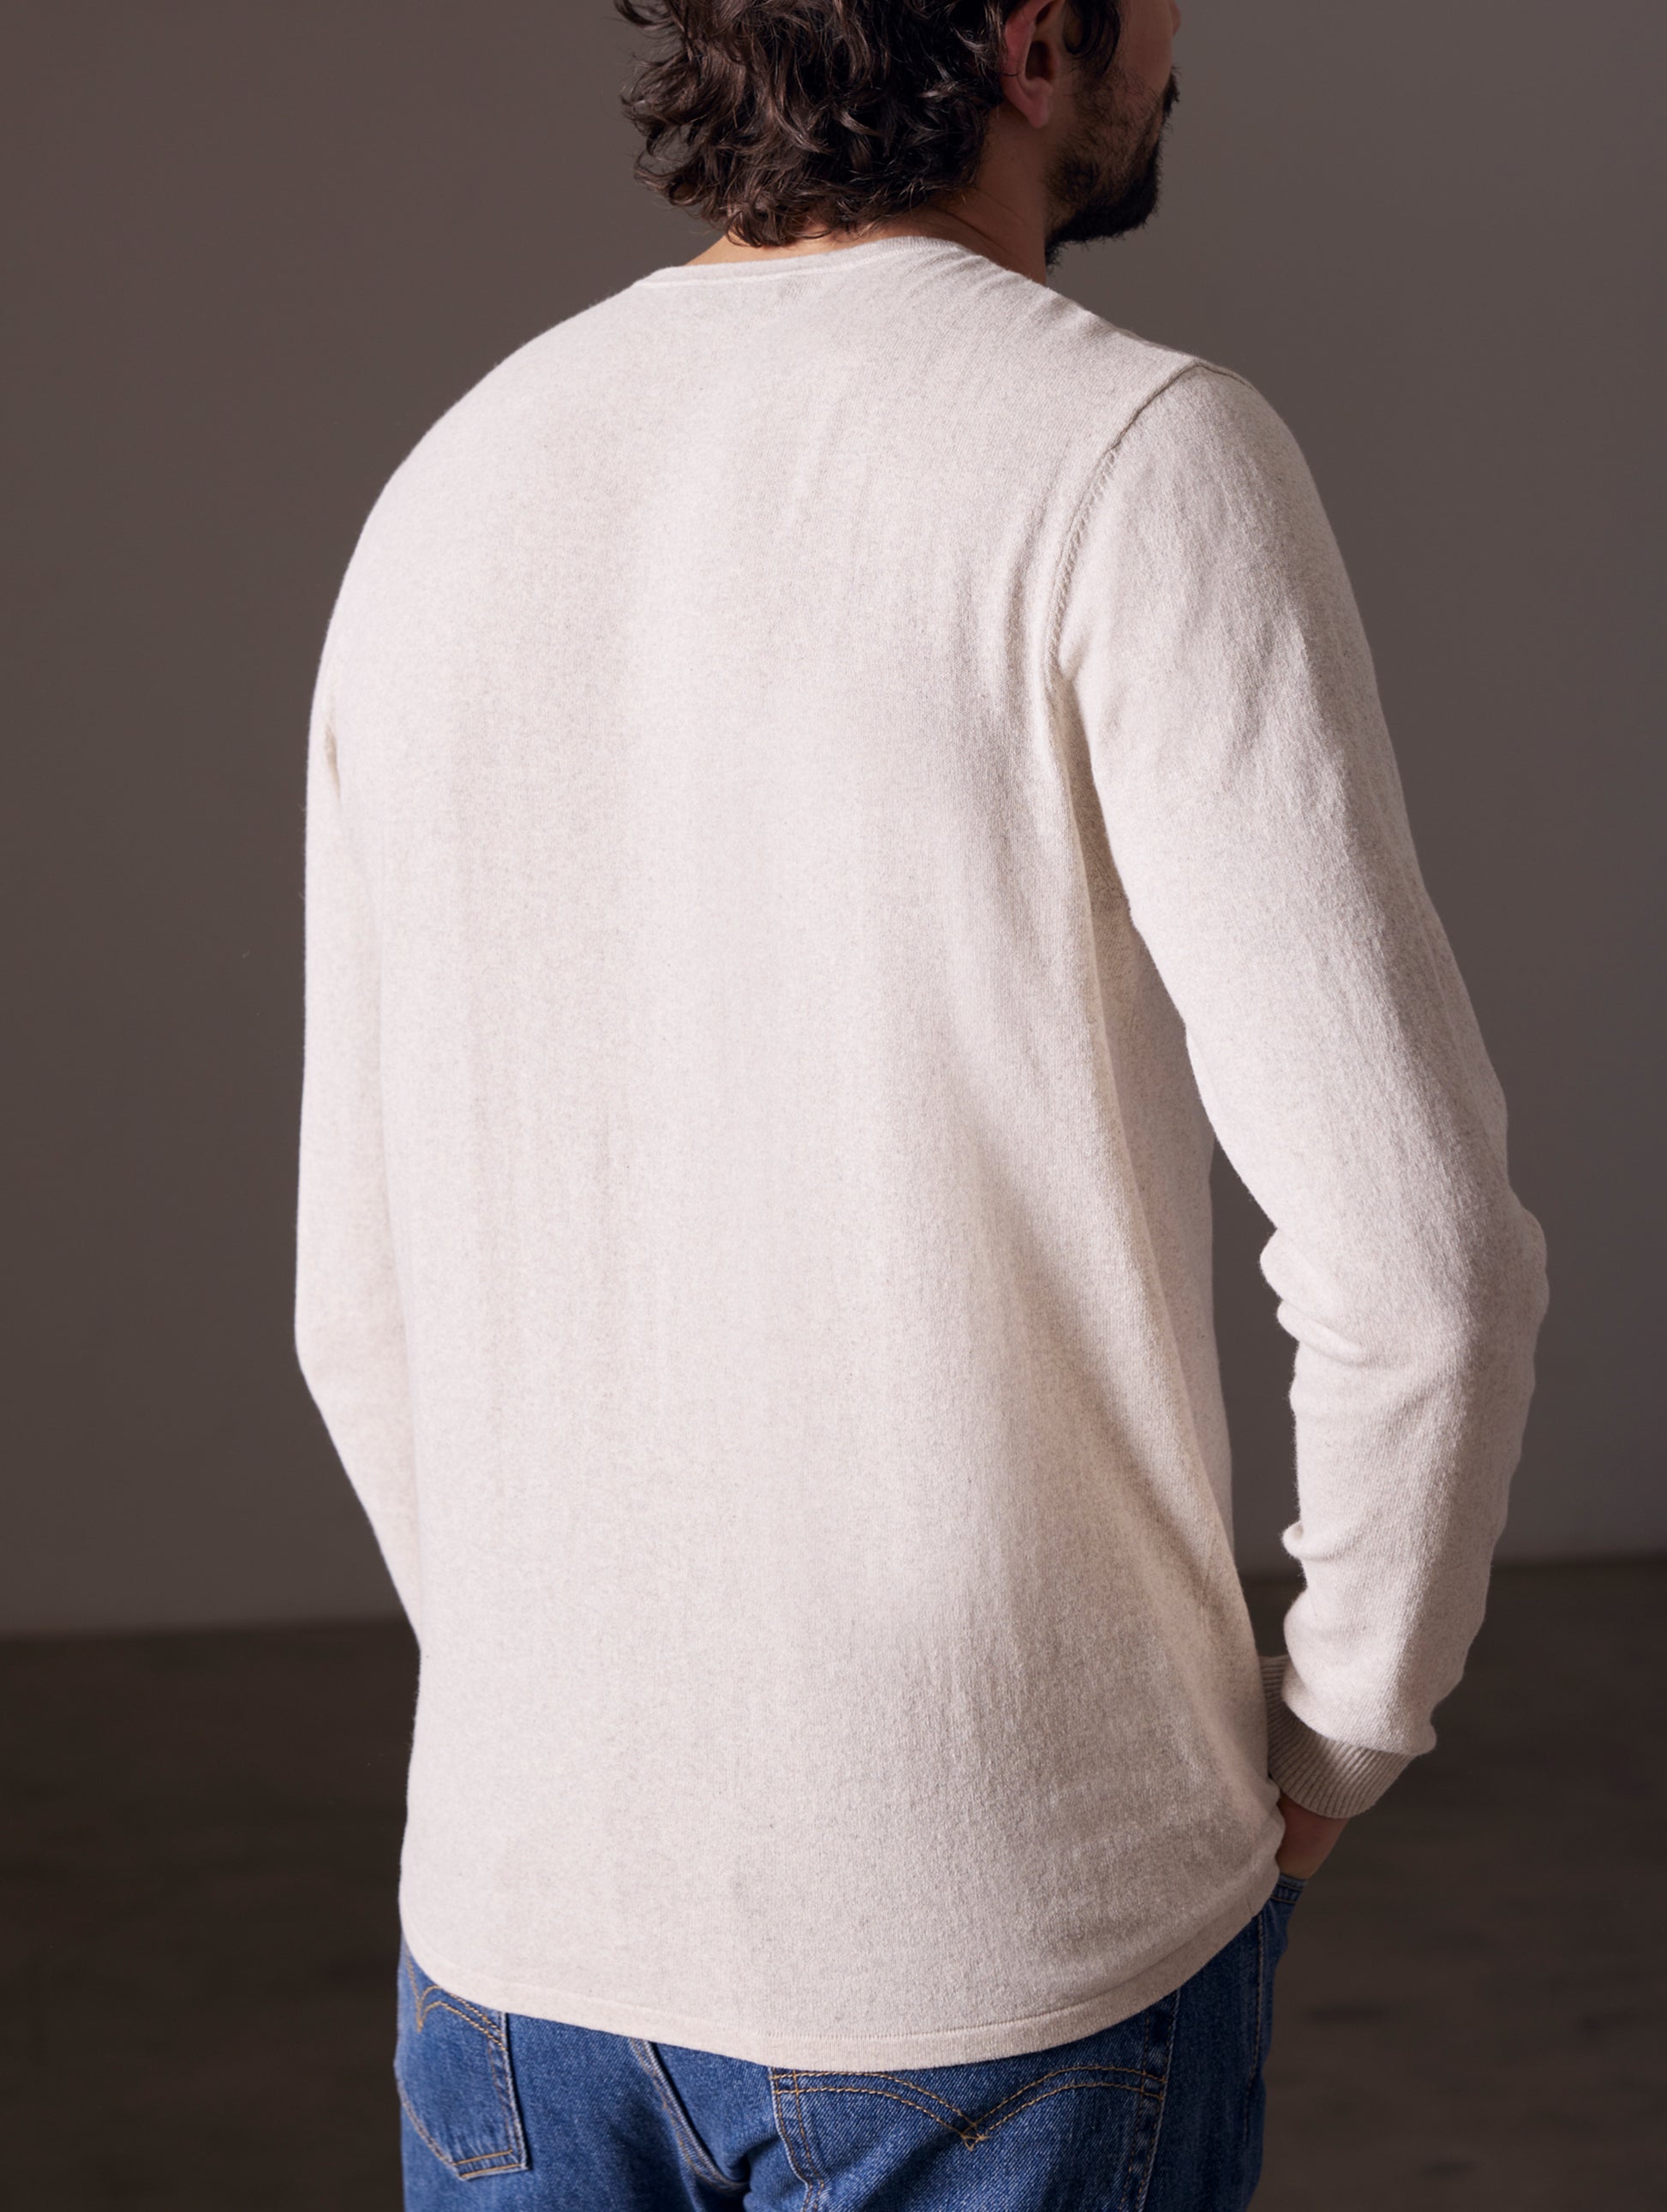 Back view of man wearing light tan sweater